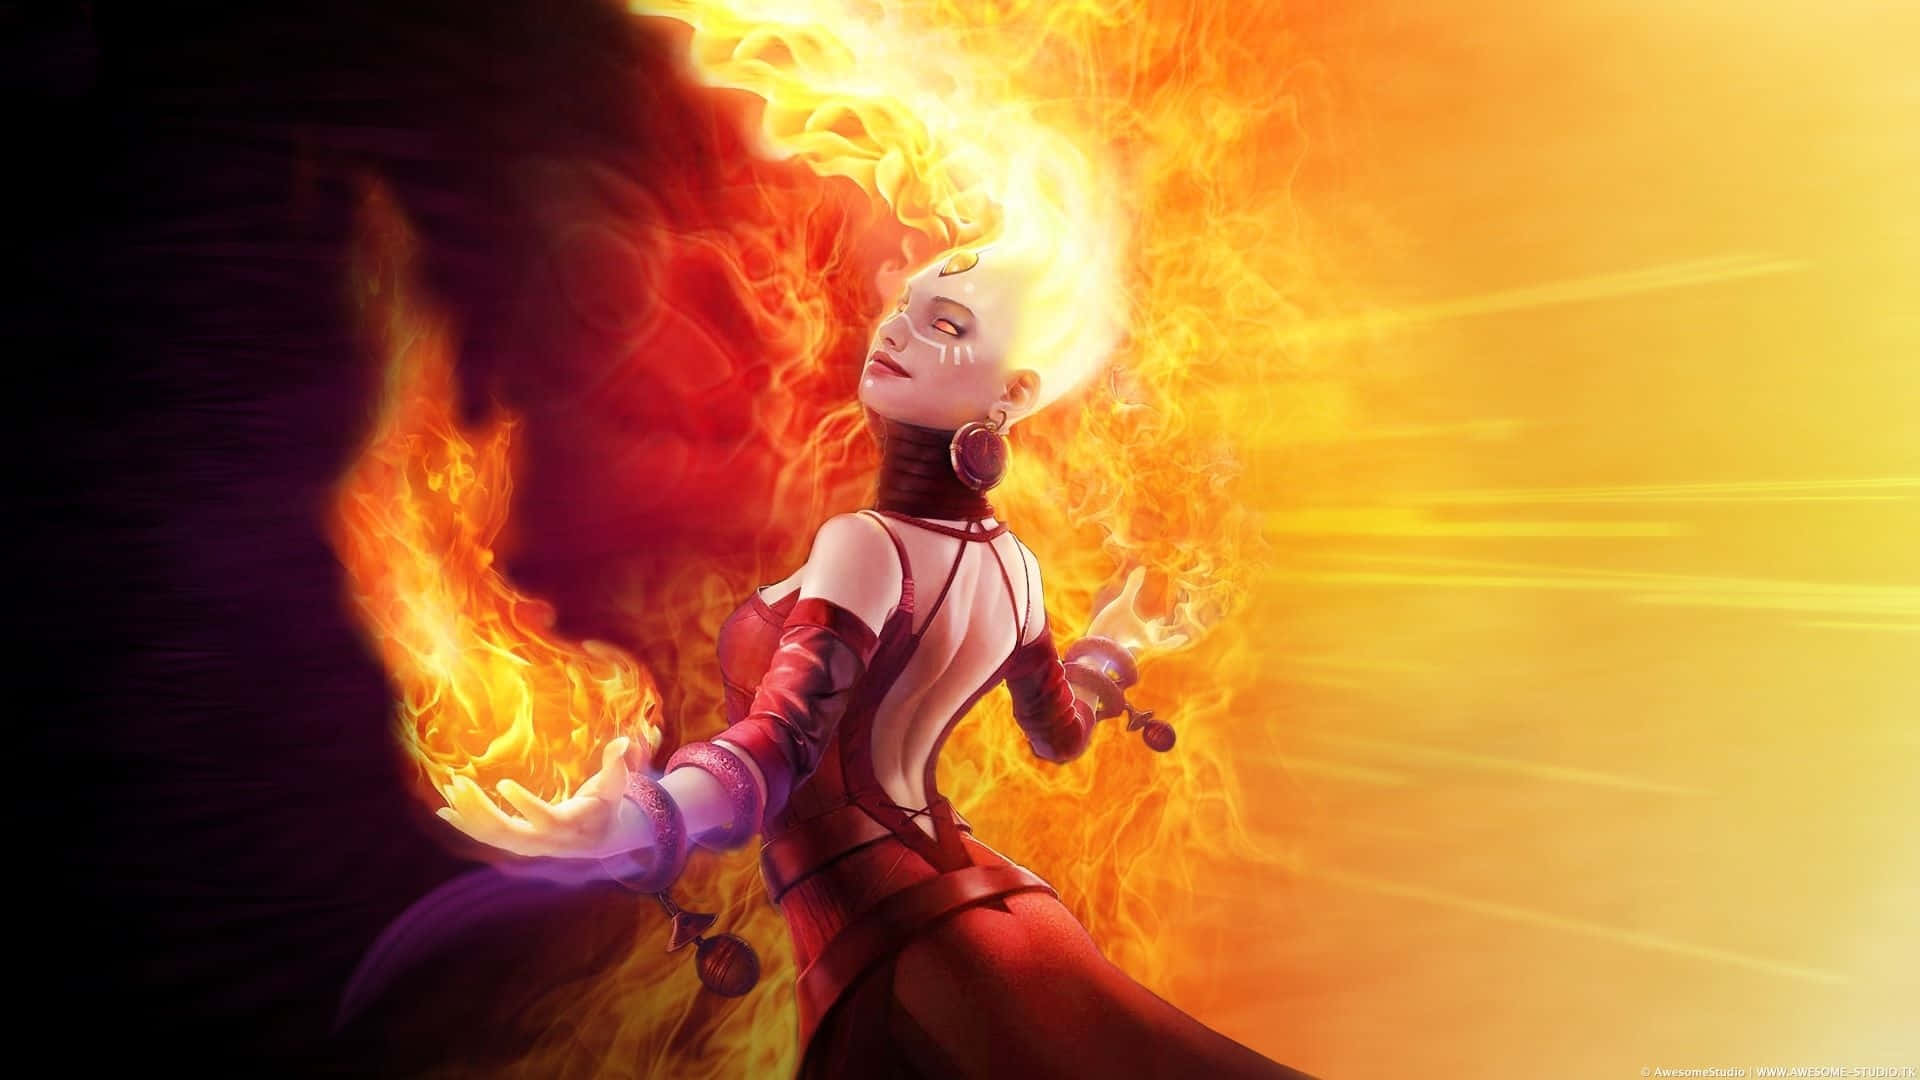 Lina, the Fiery Spellcaster of Dota 2 Wallpaper